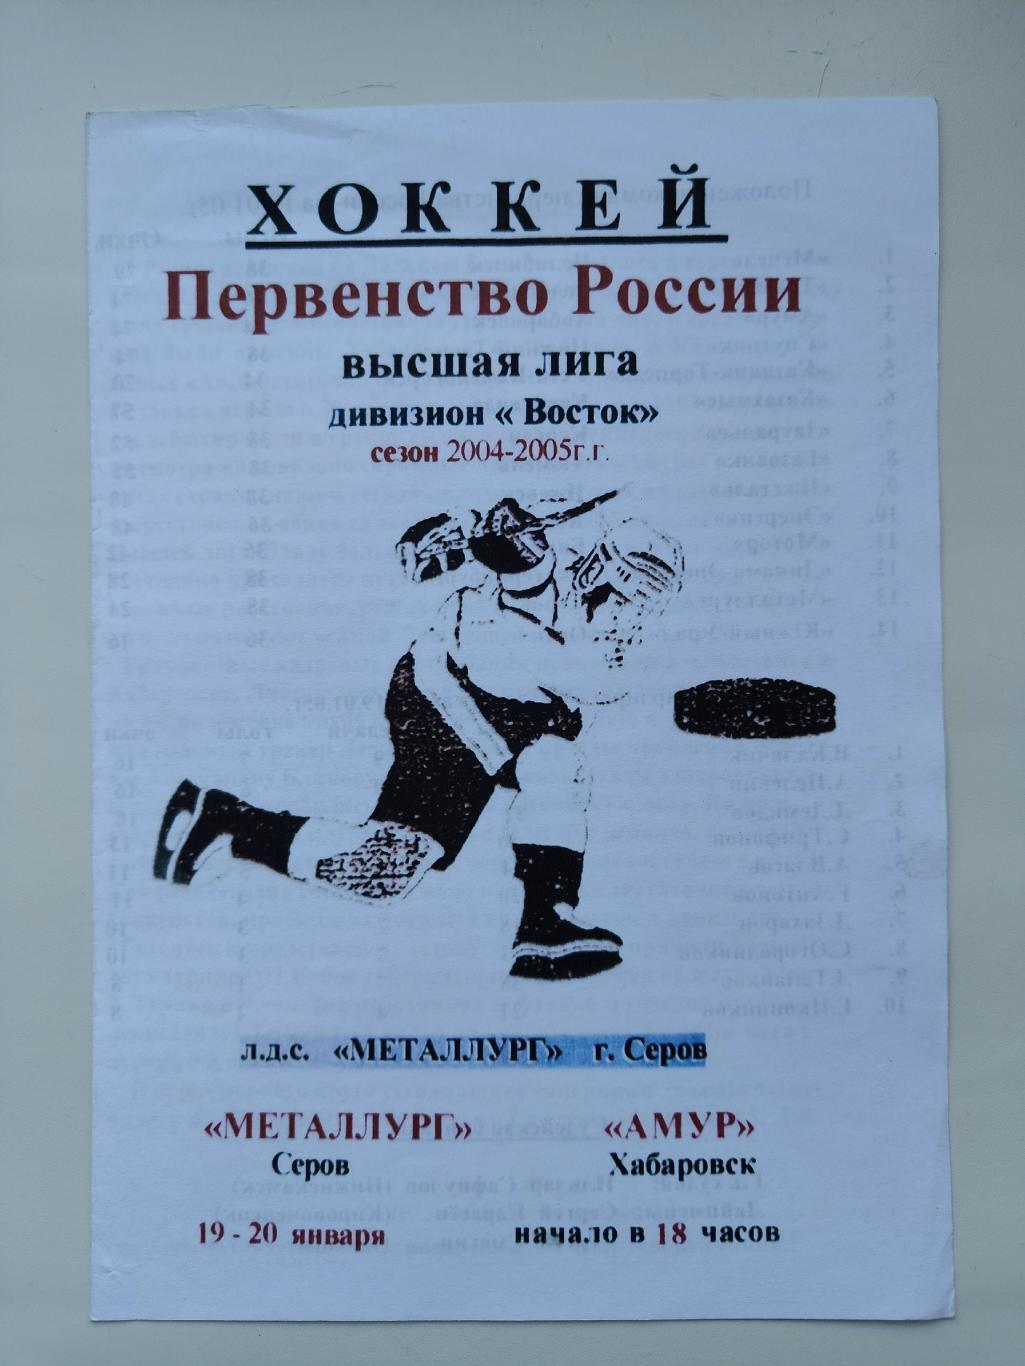 Металлург Серов - Амур Хабаровск 19/20 января 2005